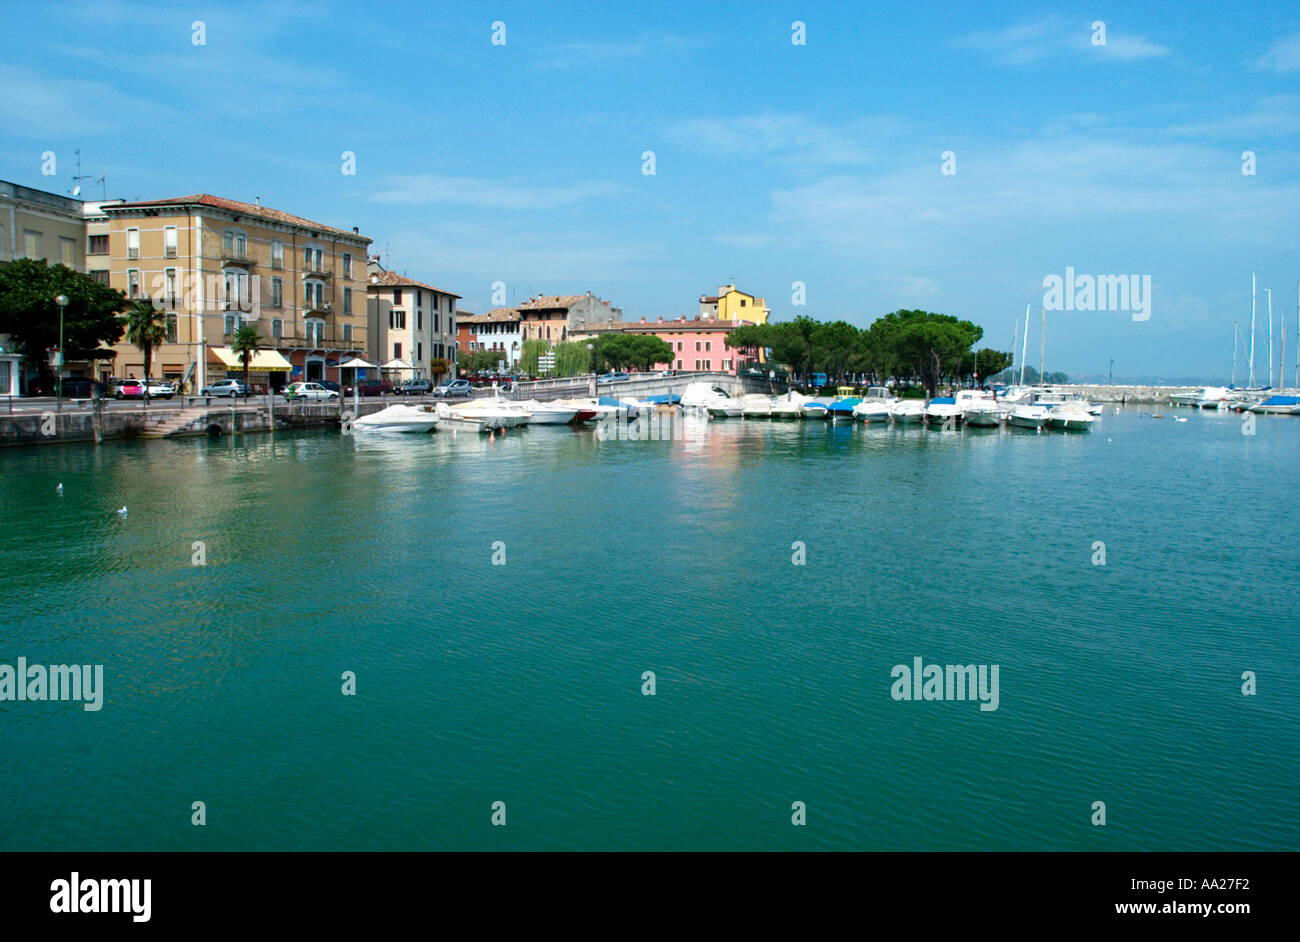 Lakefront and harbour, Desenzano, Lake Garda, Italy Stock Photo